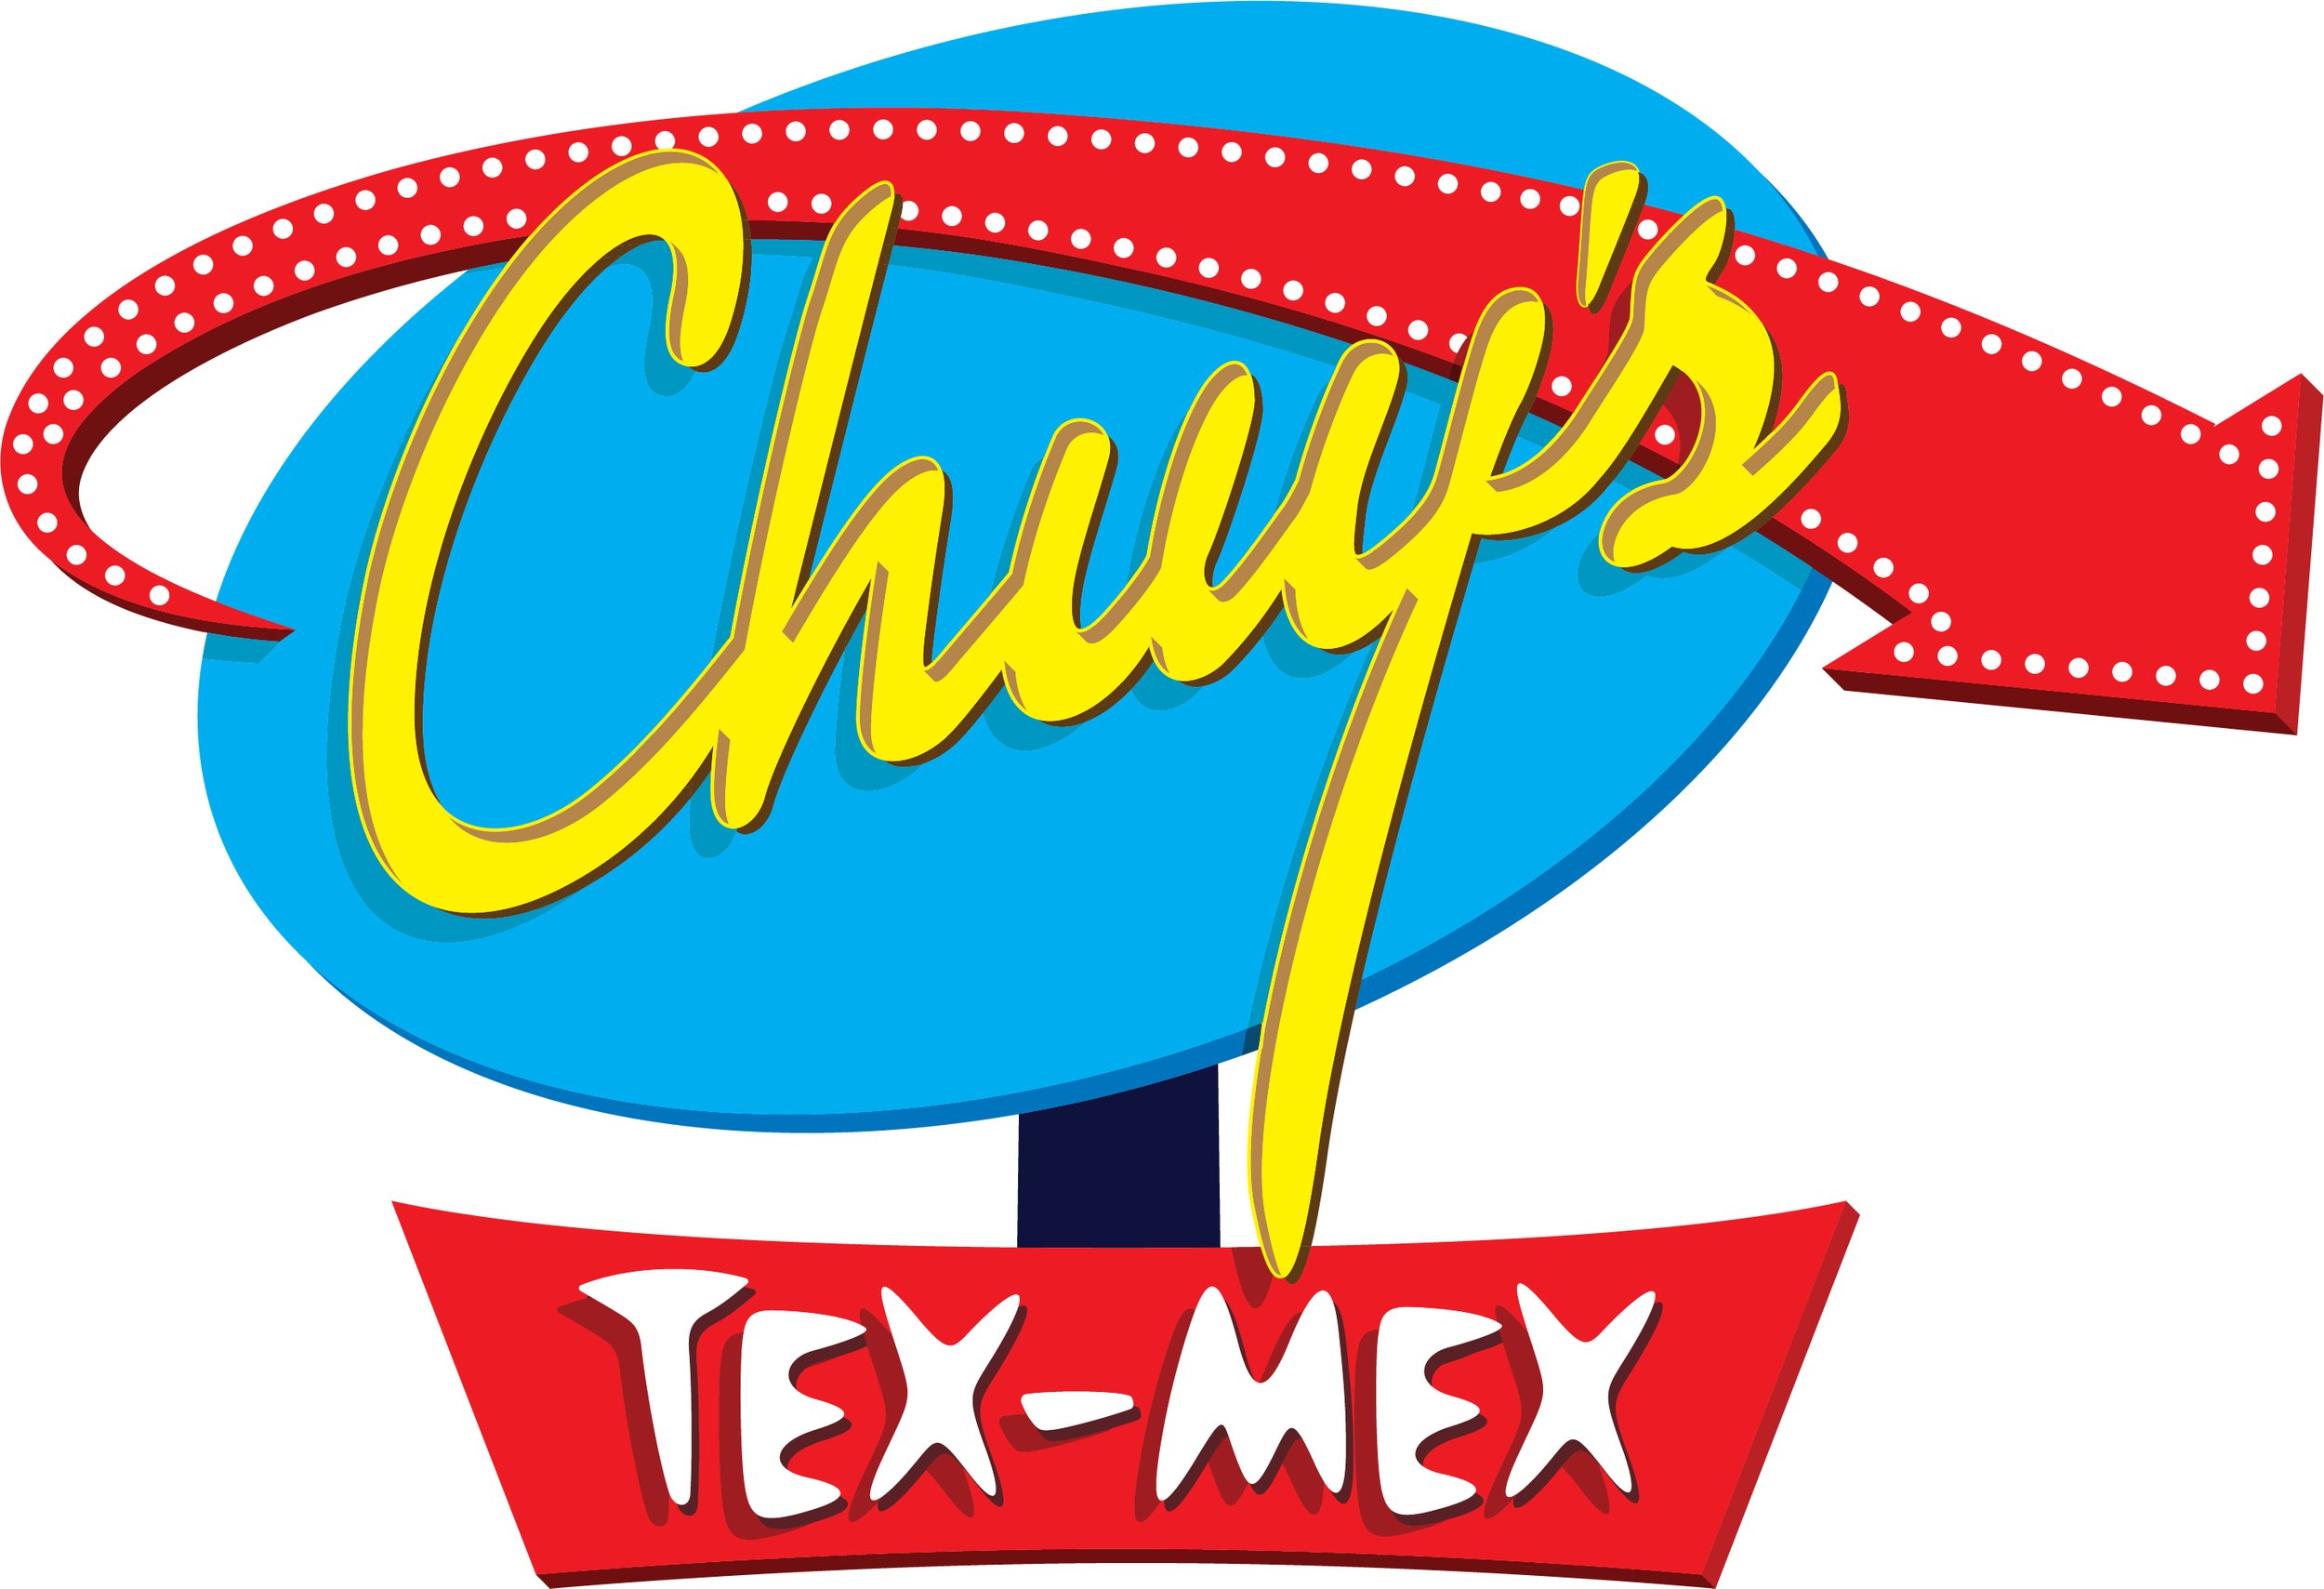 Chuys Tex Mex